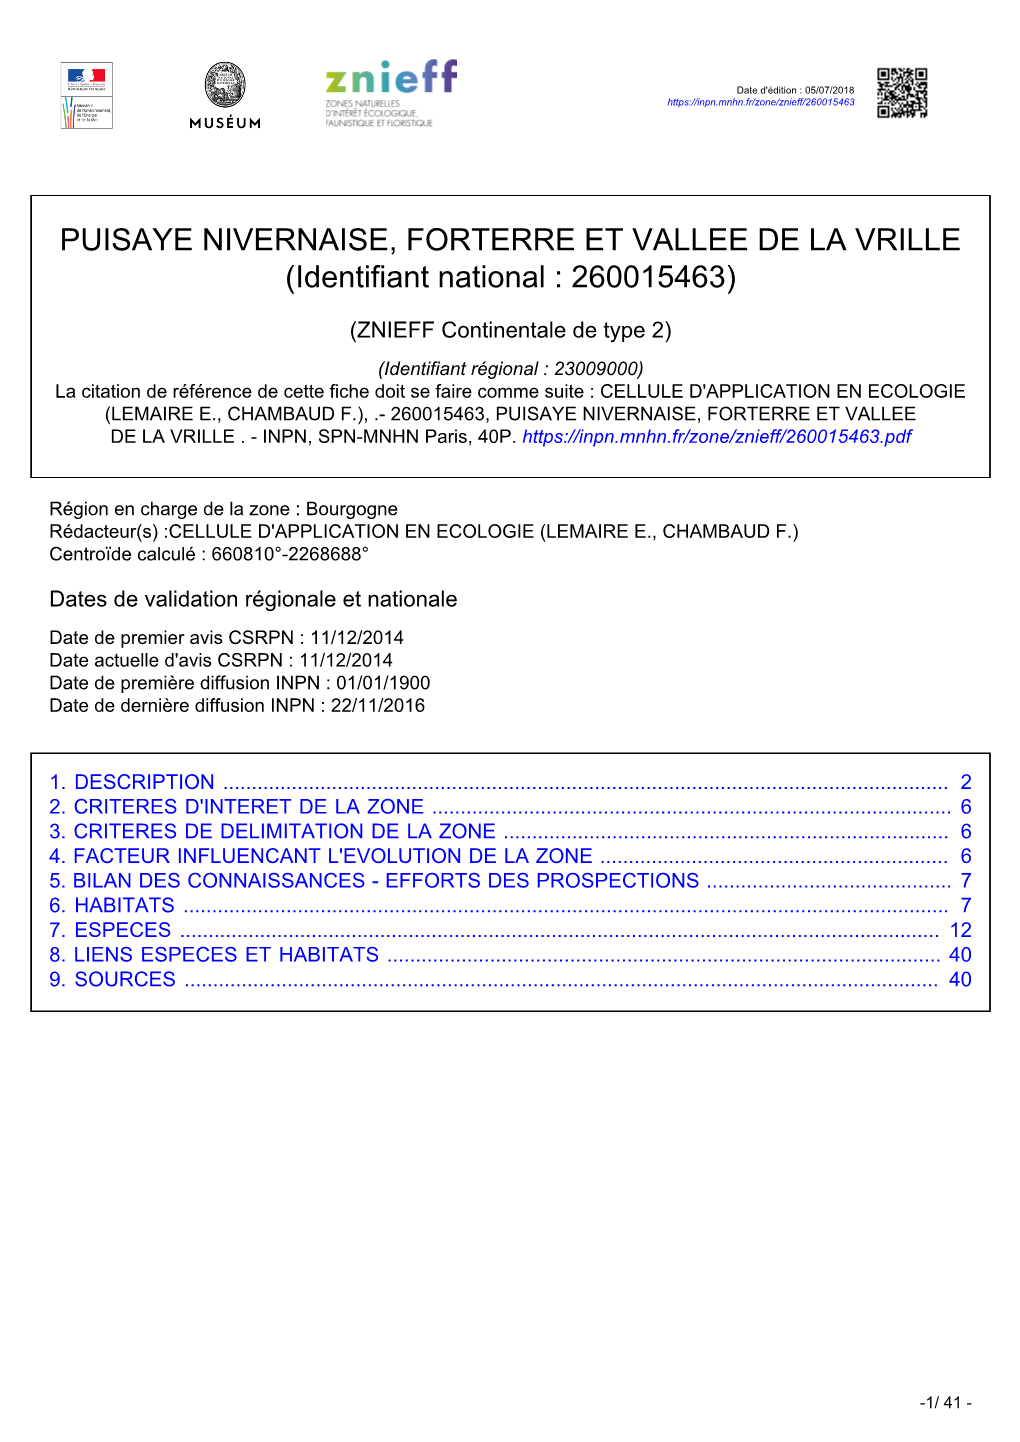 PUISAYE NIVERNAISE, FORTERRE ET VALLEE DE LA VRILLE (Identifiant National : 260015463)